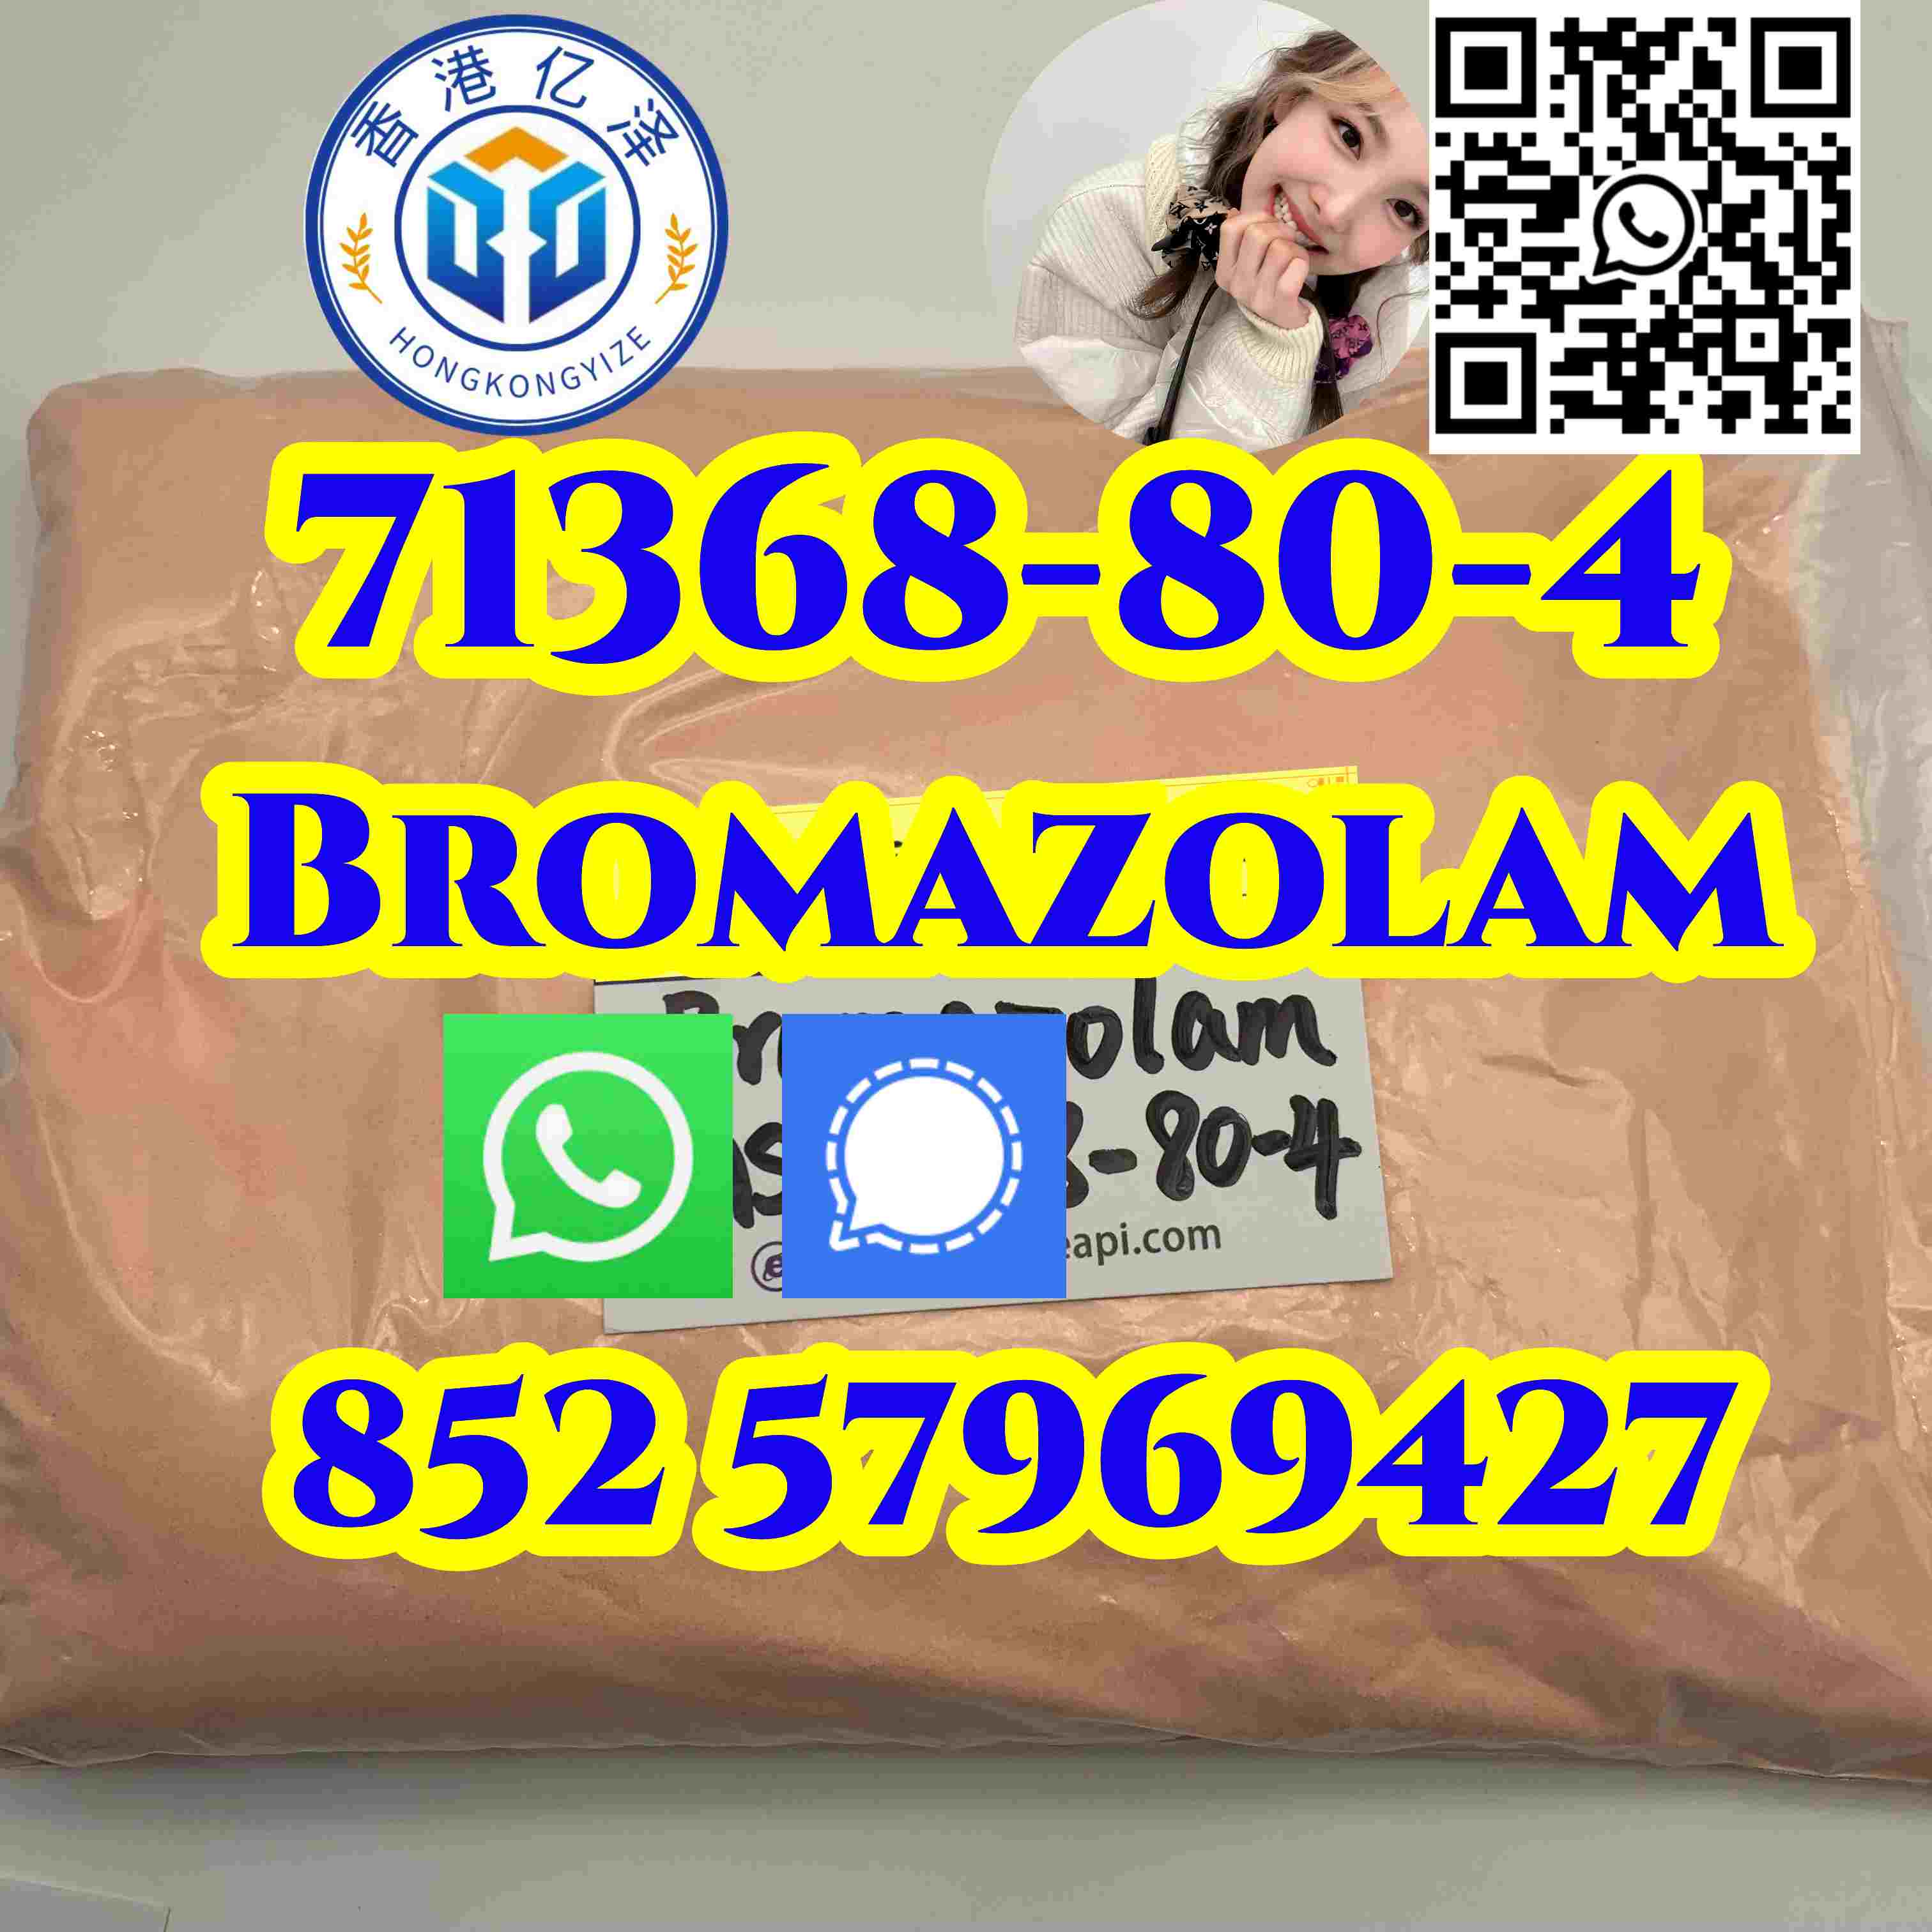 Bromazolam 71368-80-4 good effect Wholesale high quality - photo